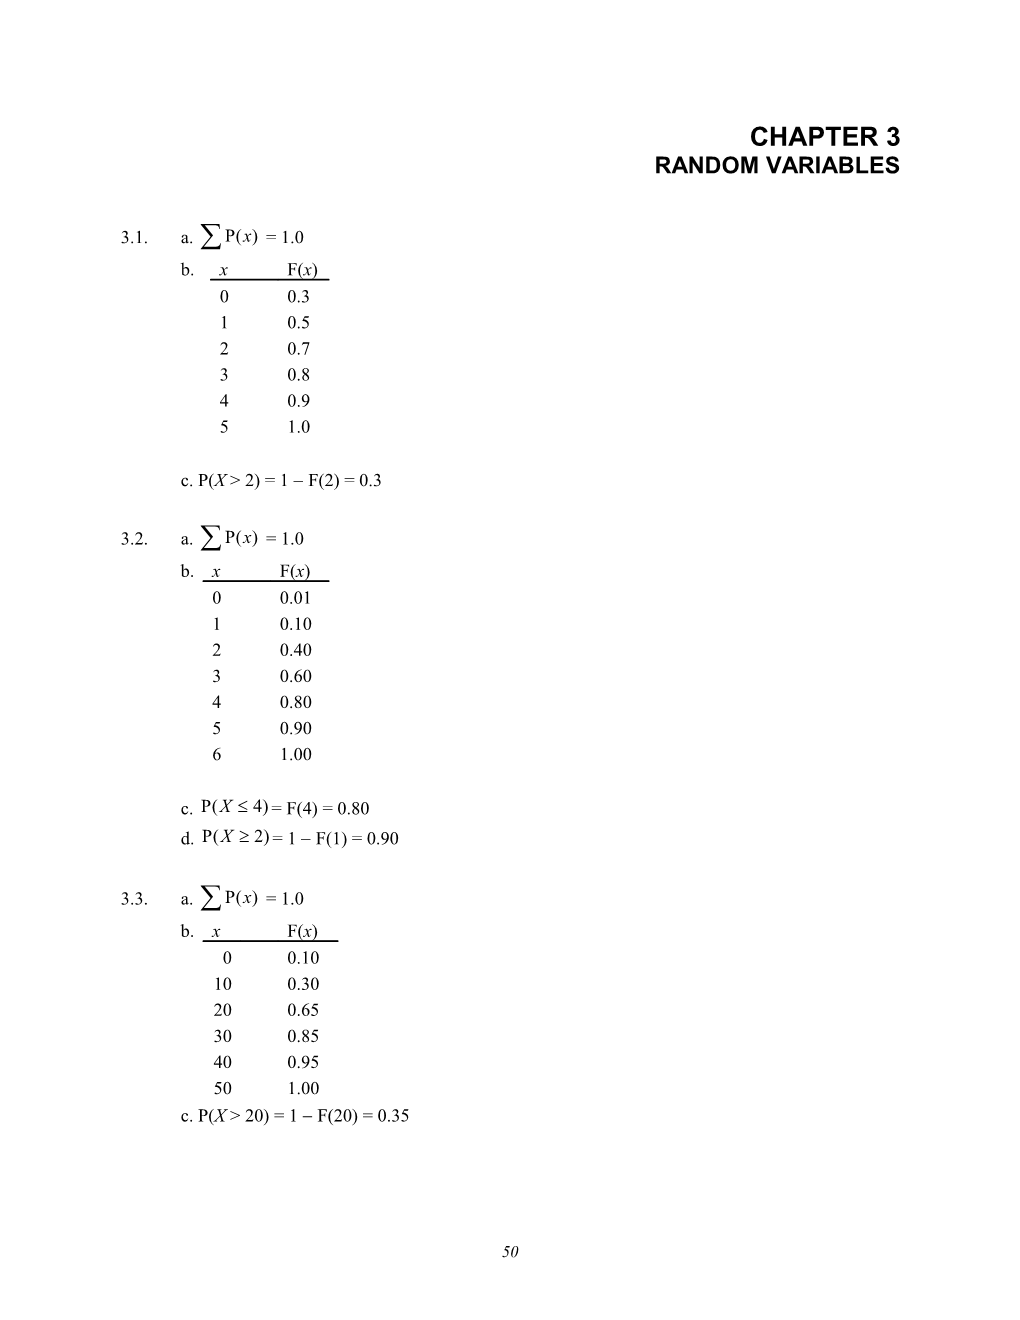 Random Variables s1